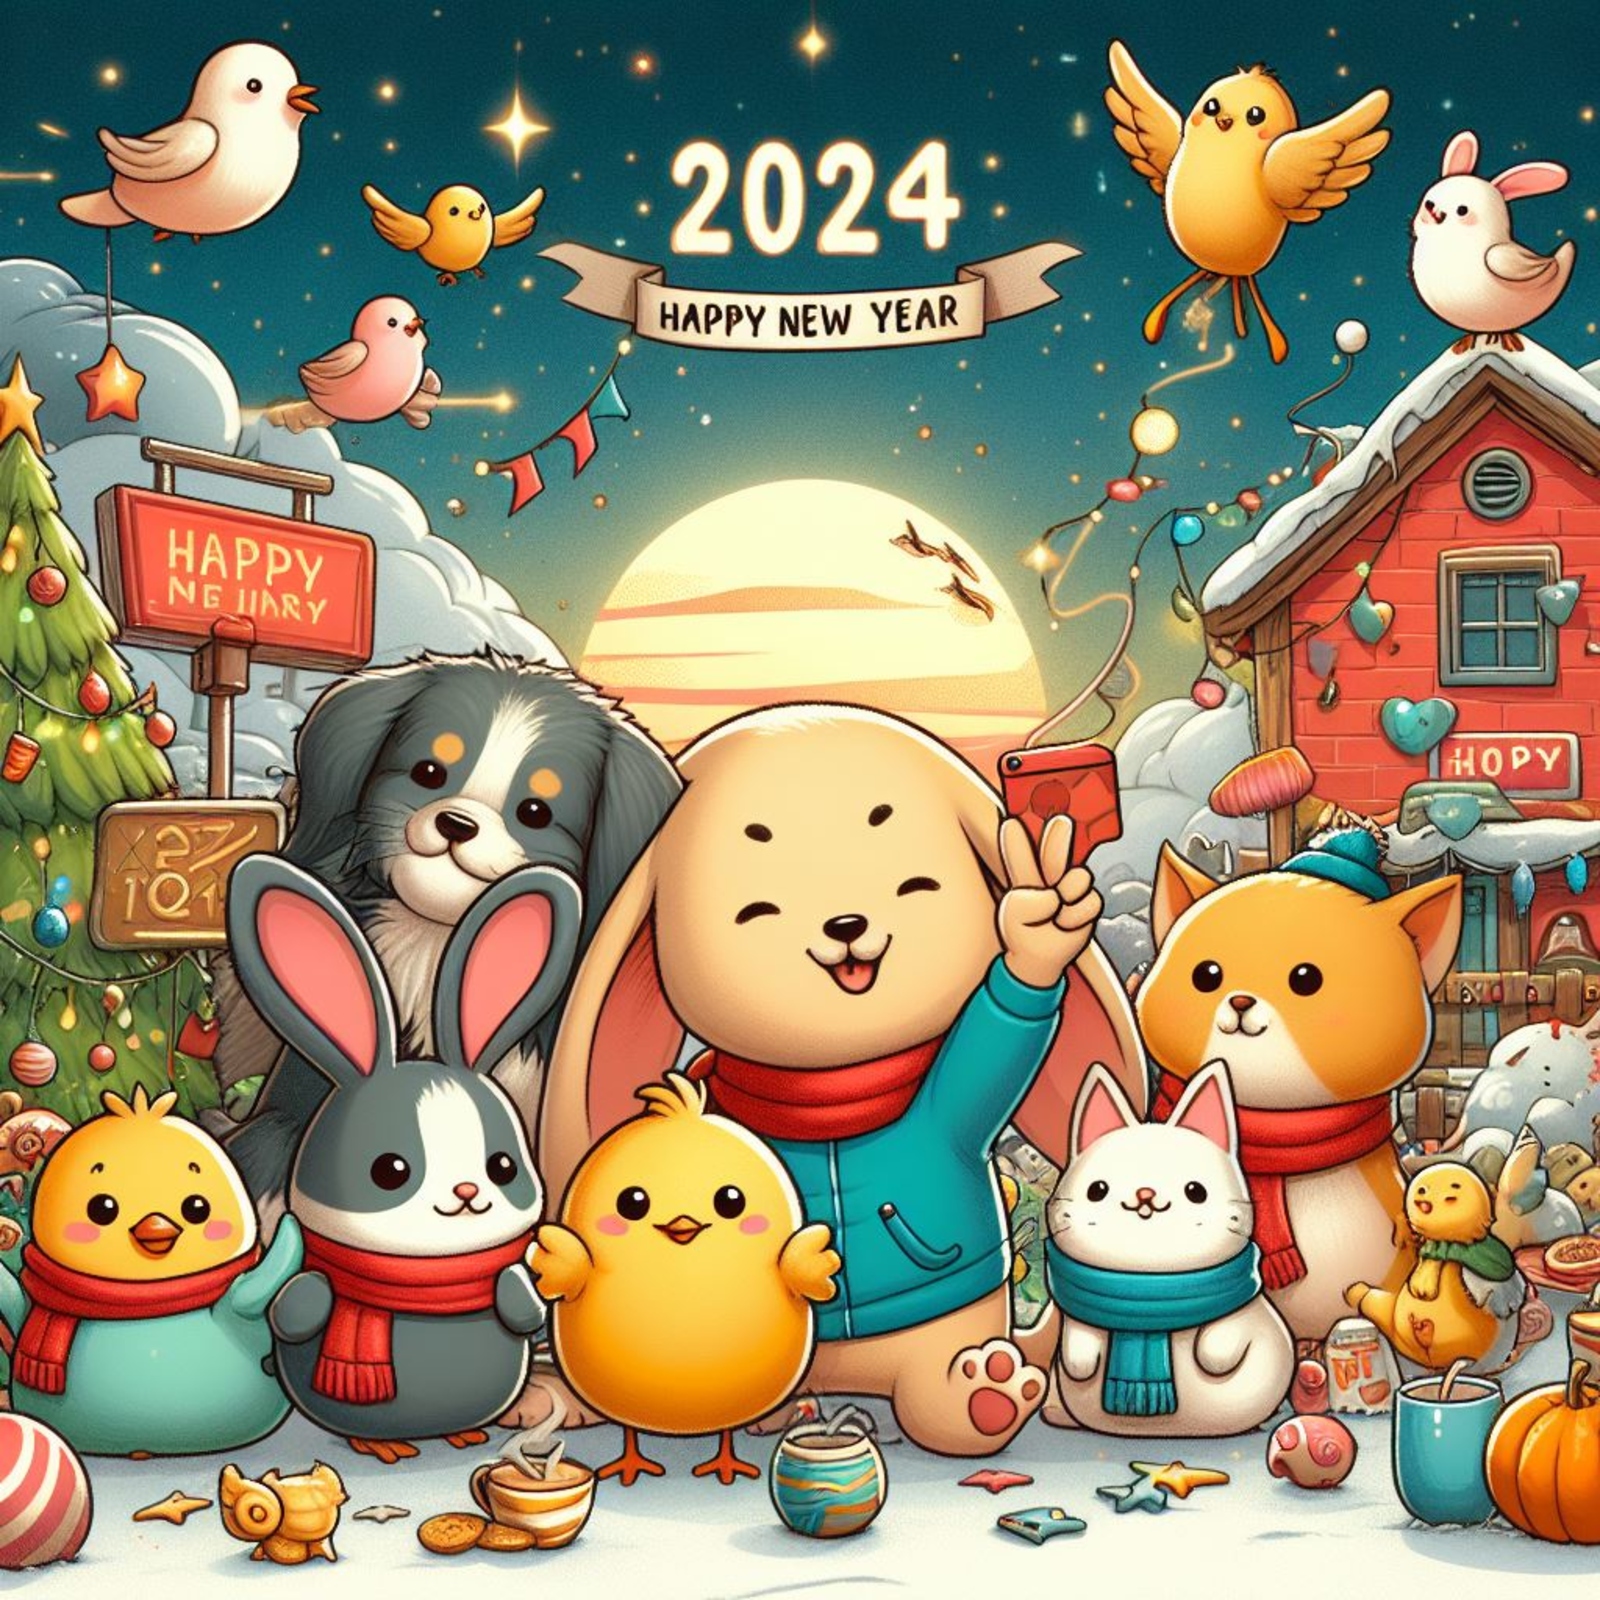 2024！！HAPPY NEW YEAR~~